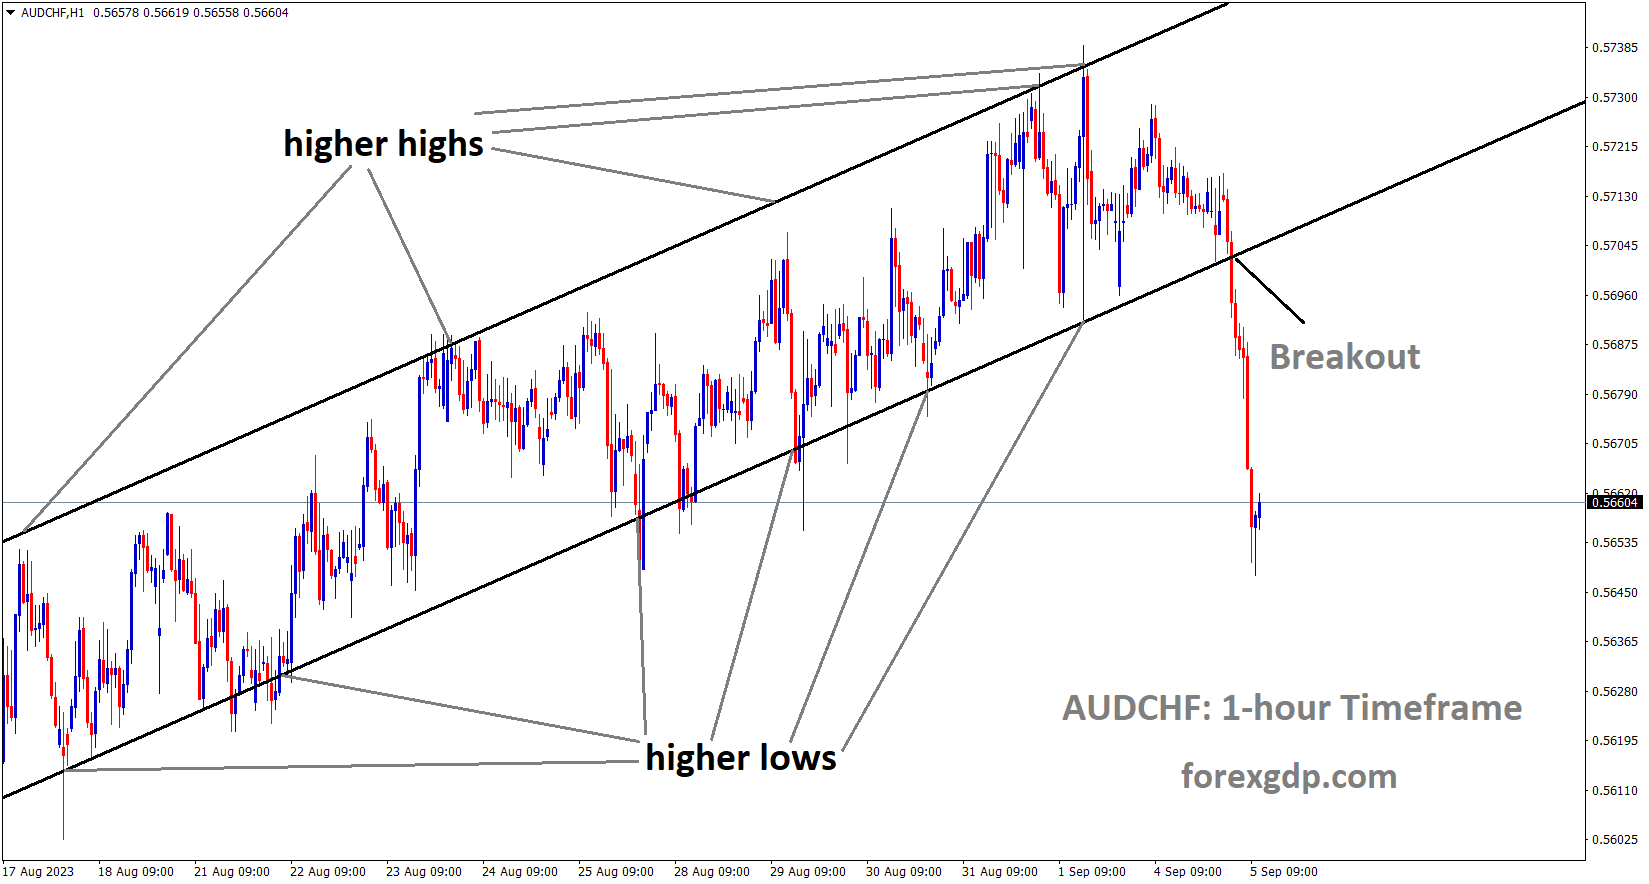 AUDCHF has broken the Ascending channel in downside